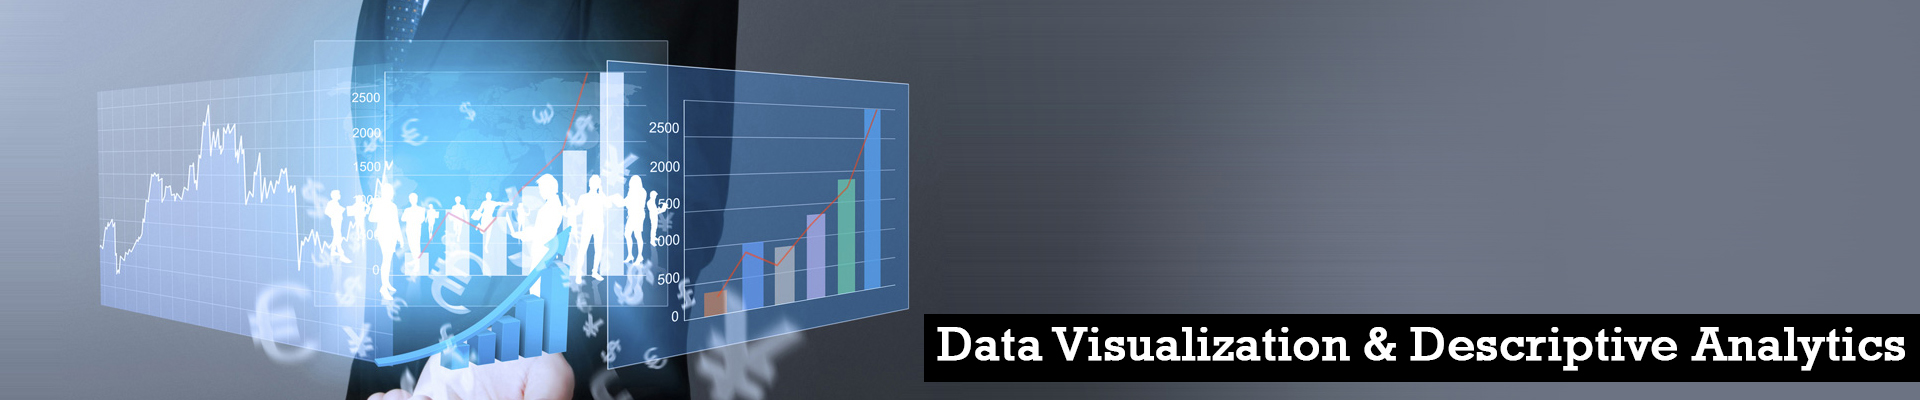 Data-Visualization-Descriptive-Analytics Training and Certification